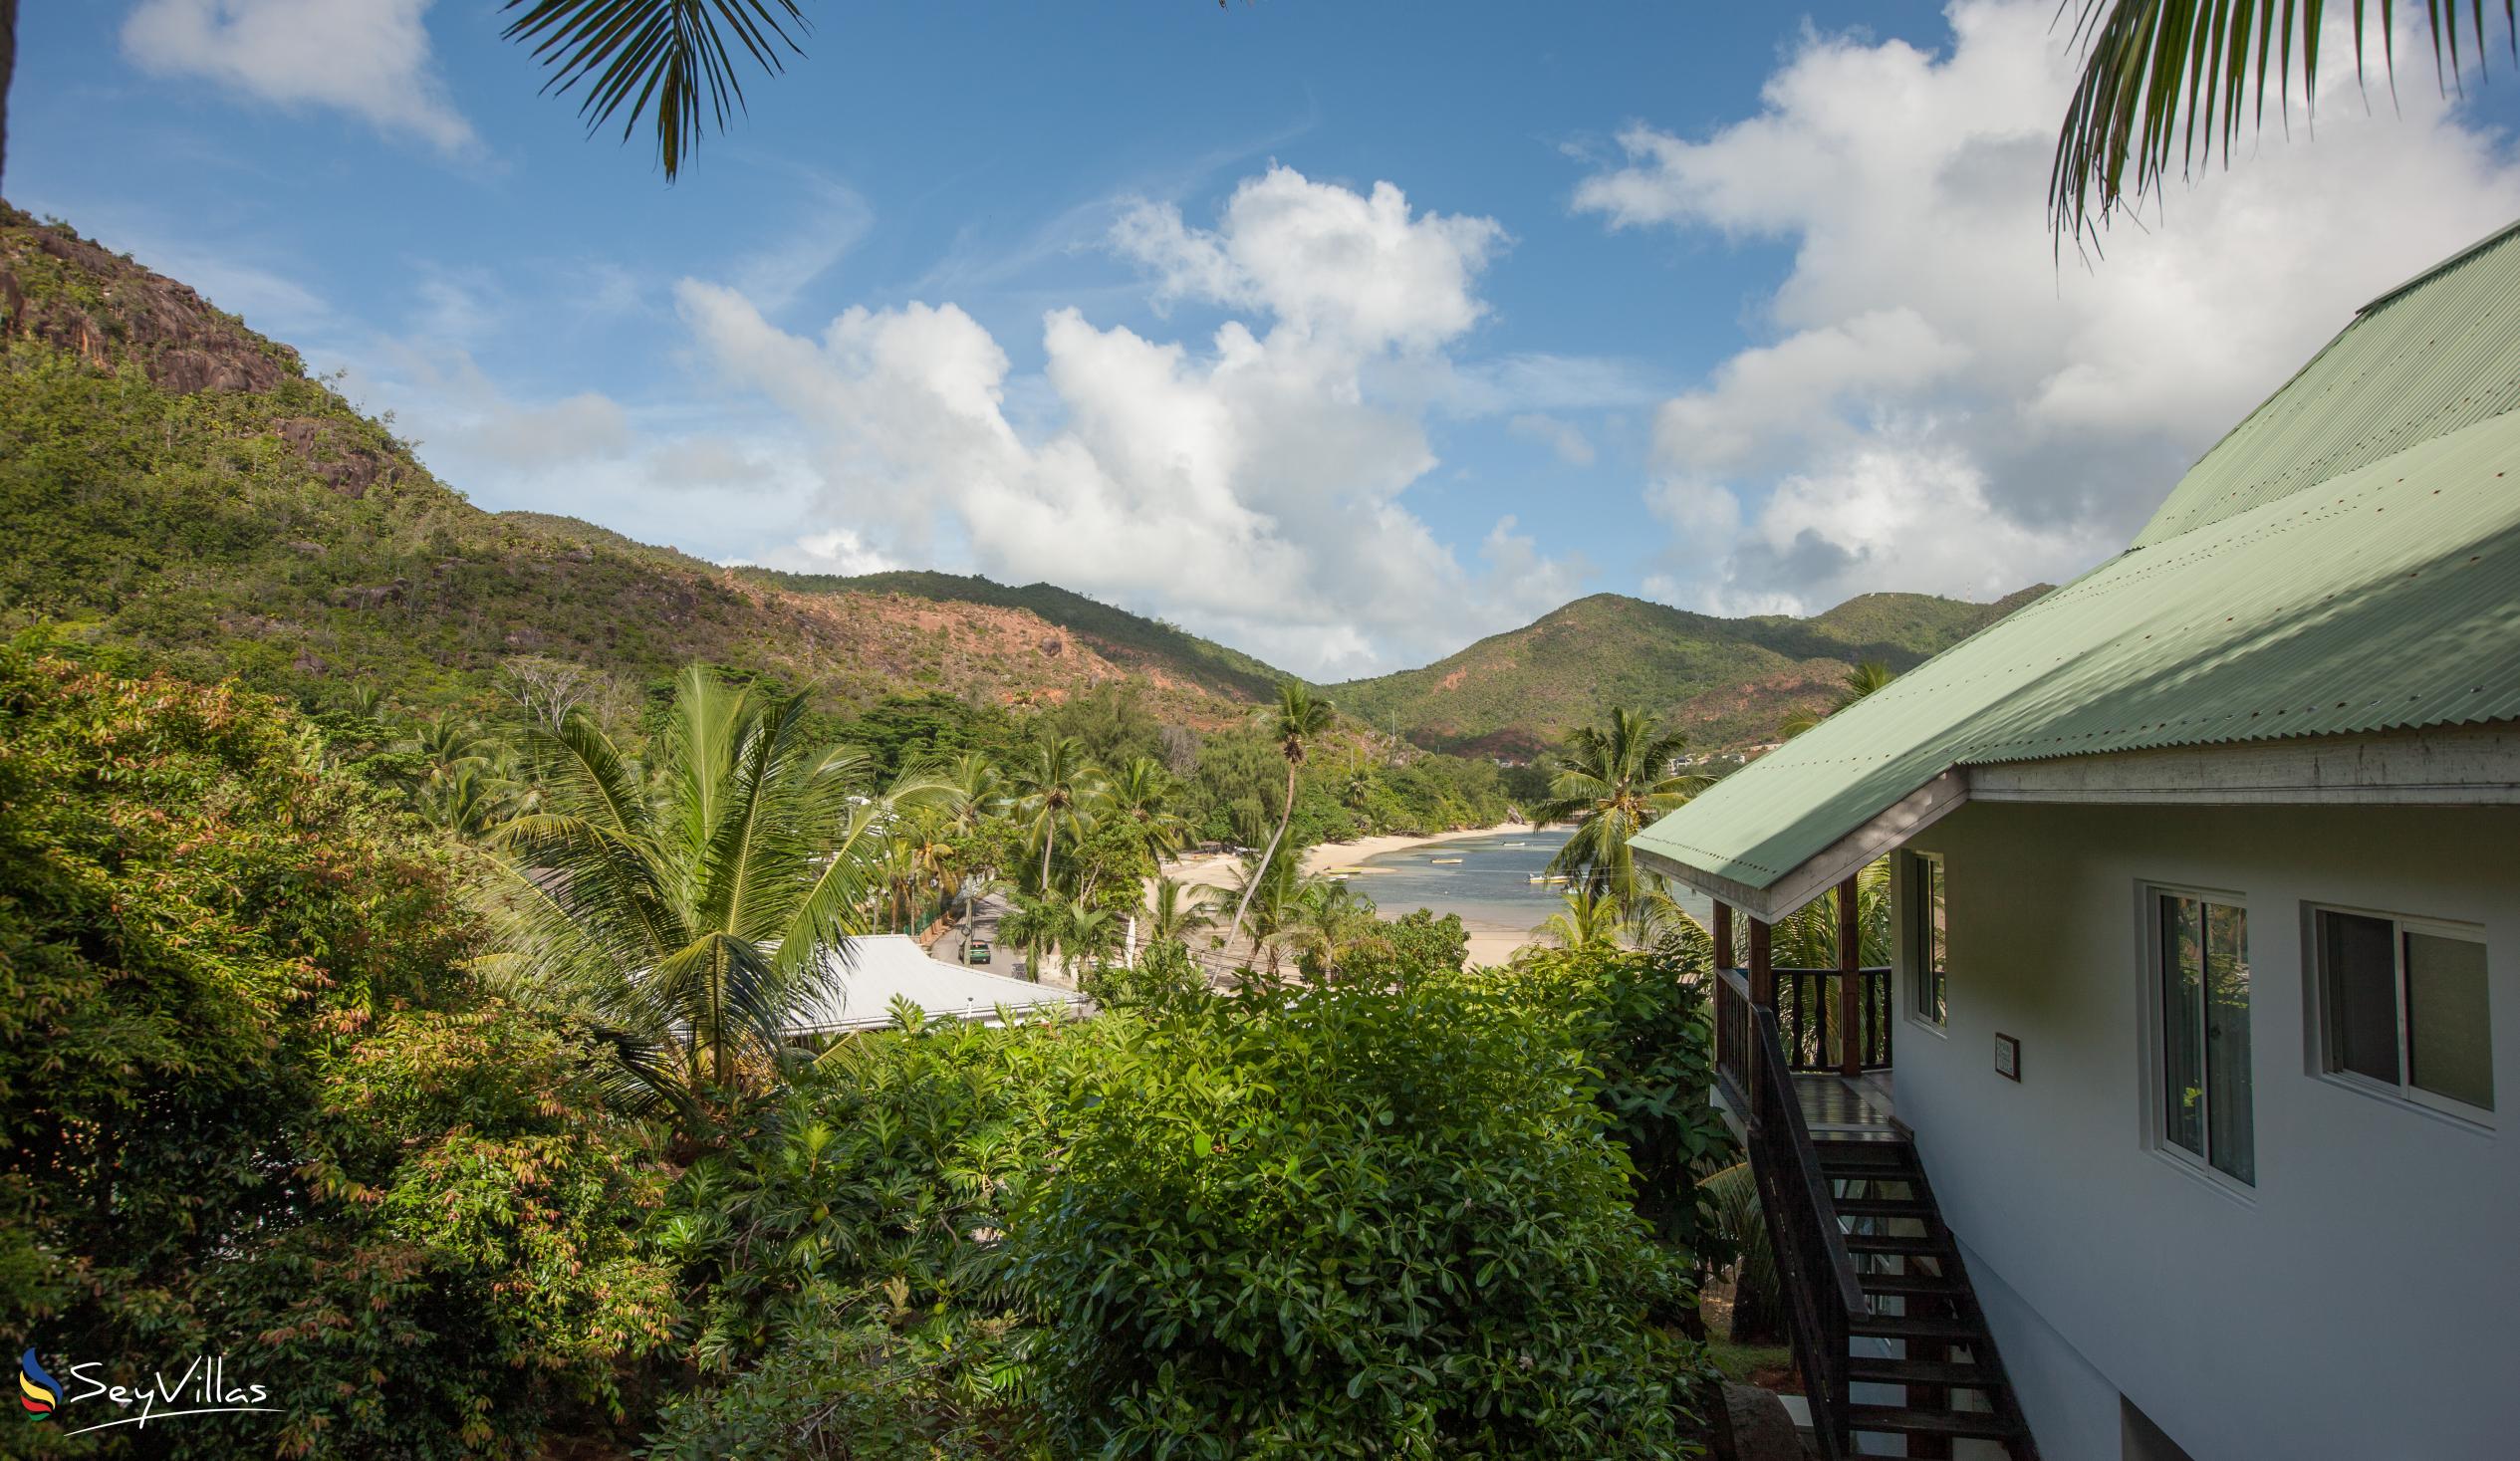 Photo 1: Sea View Lodge - Outdoor area - Praslin (Seychelles)